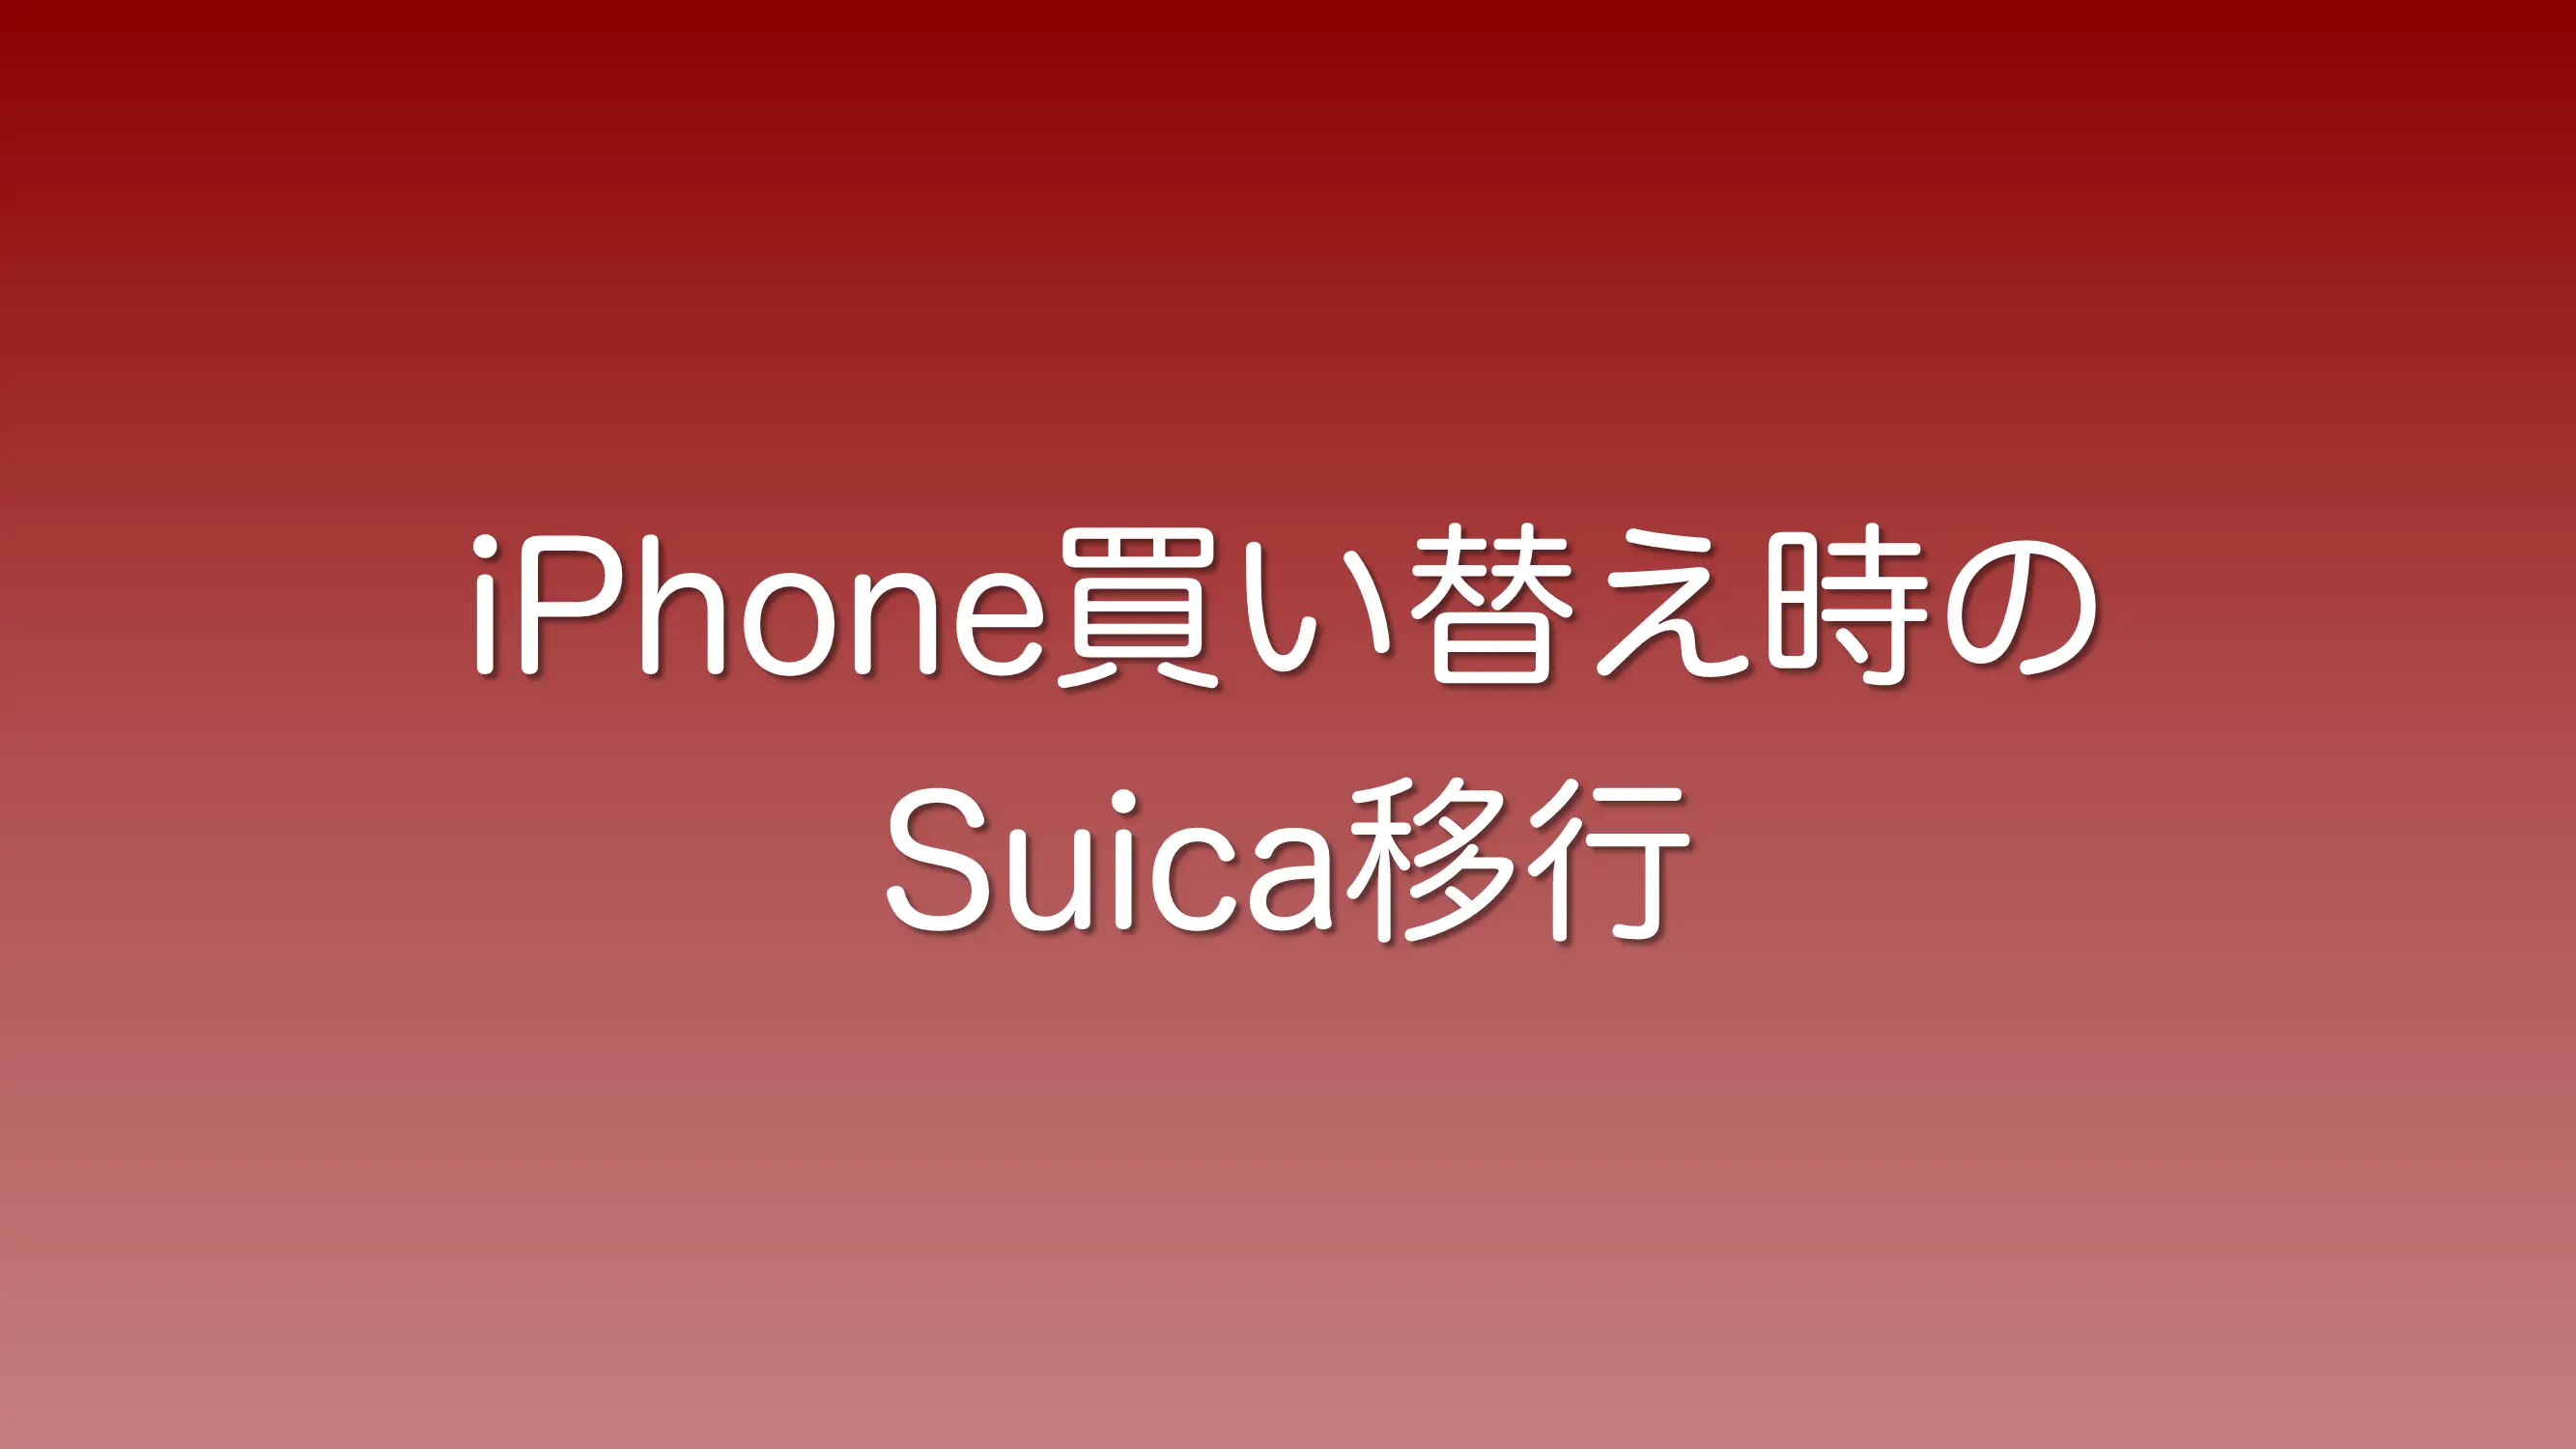 iPhone買い替え時のSuica移行